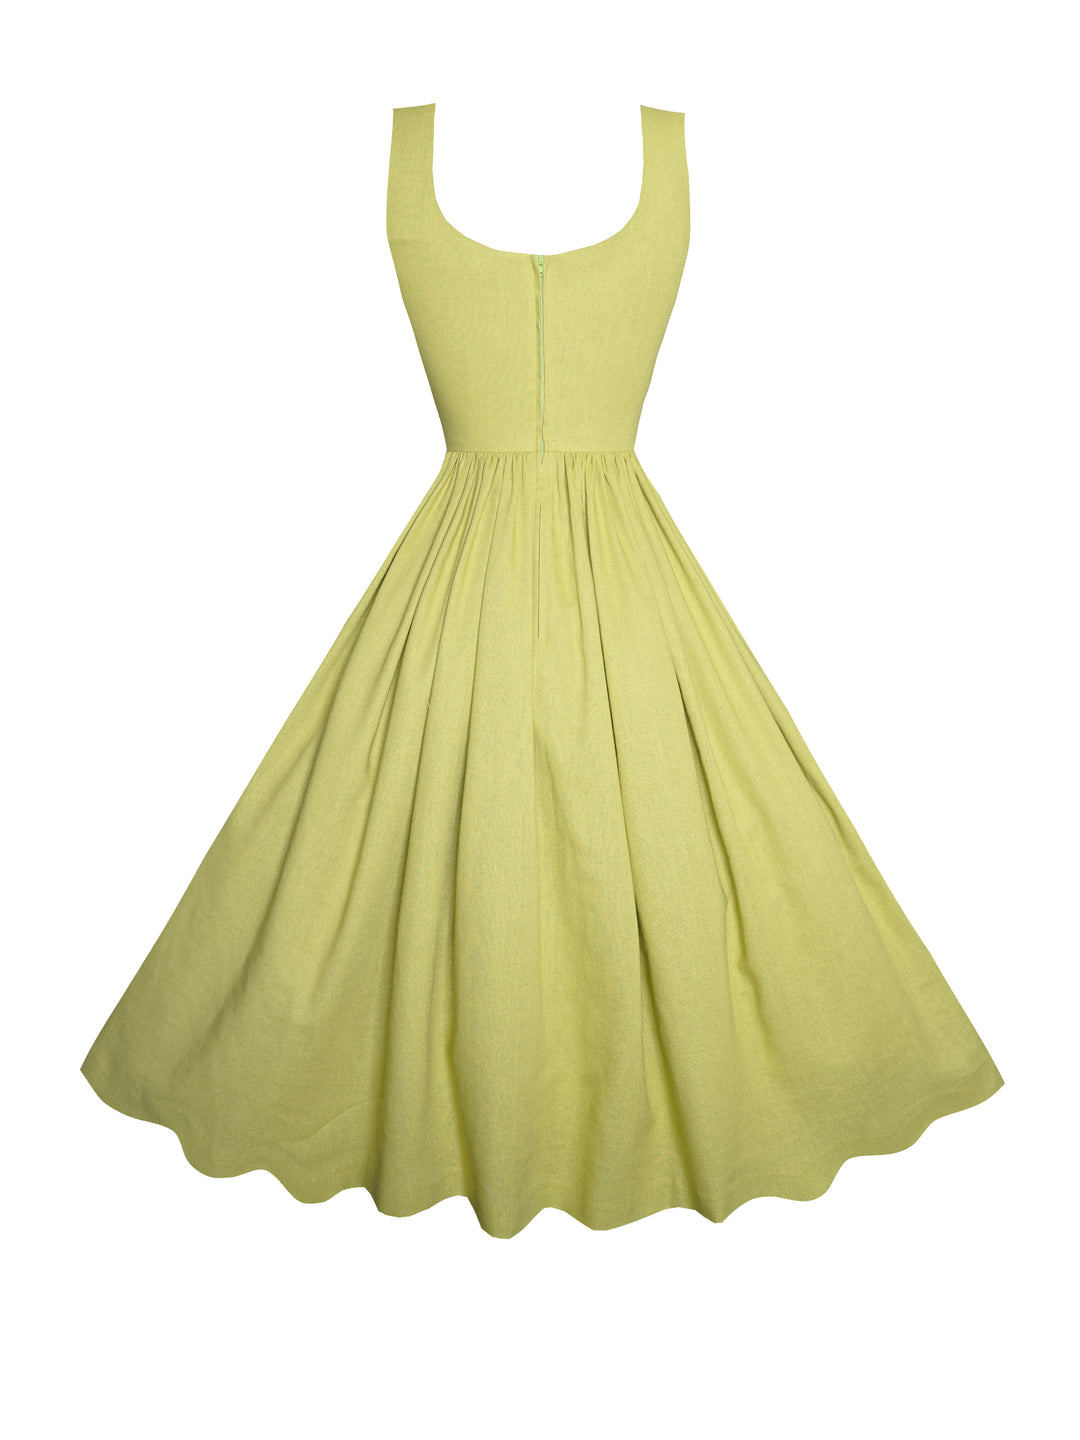 MTO - Emily Dress in Pistachio Green Linen